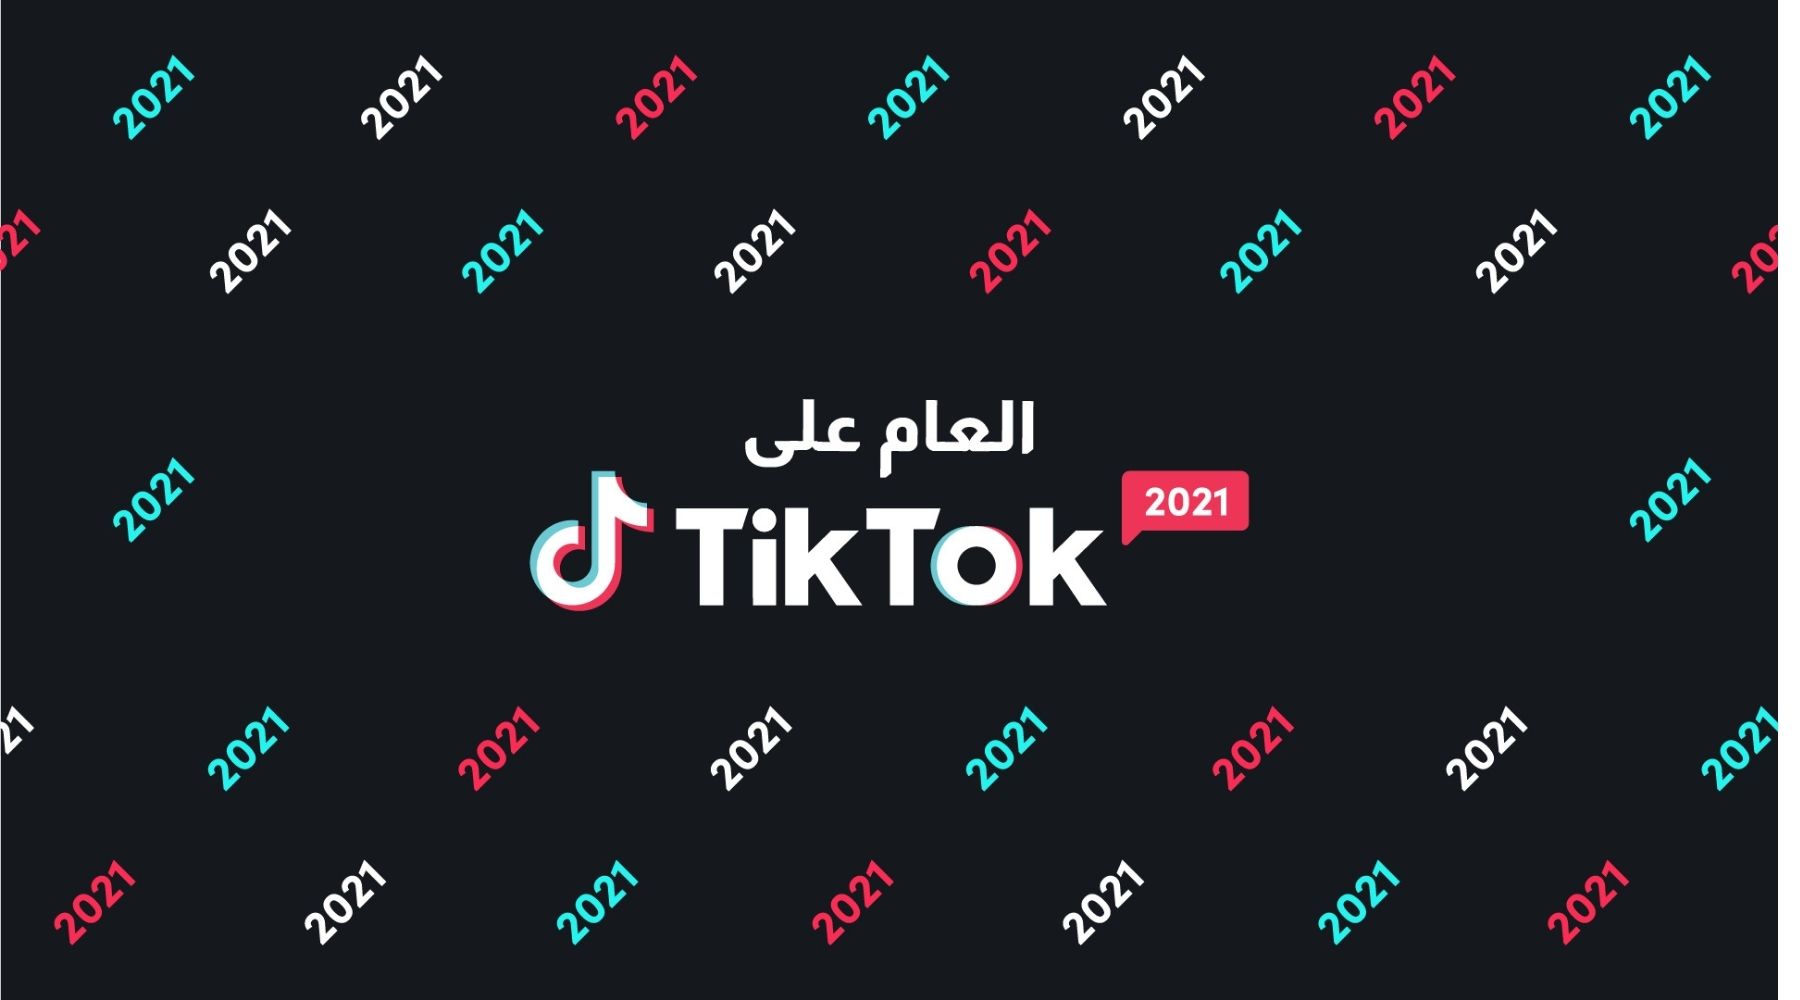 TikTok Celebrates Brands that Made an Impact this Year